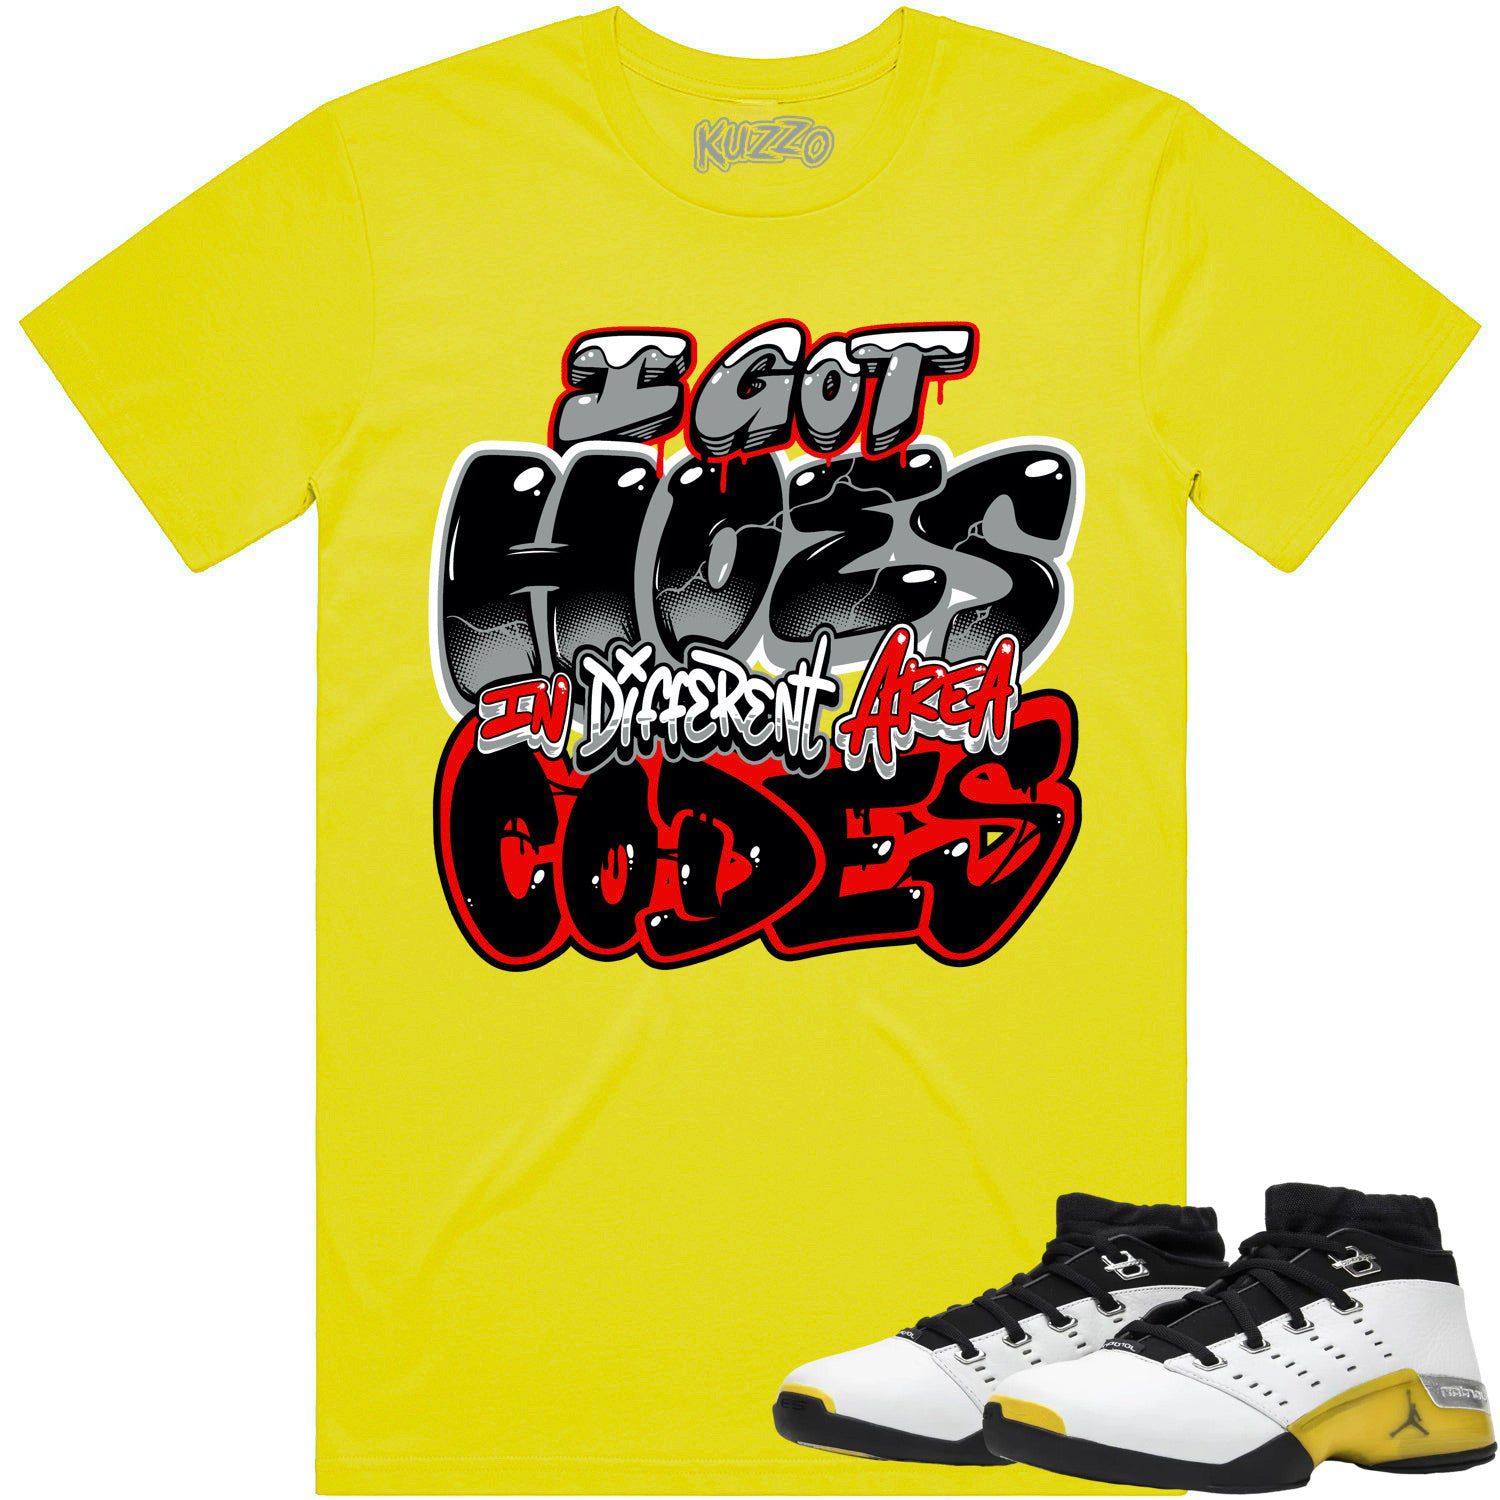 Lightning 17s Shirts - Jordan 17 Lightning Sneaker Tees - Area Codes